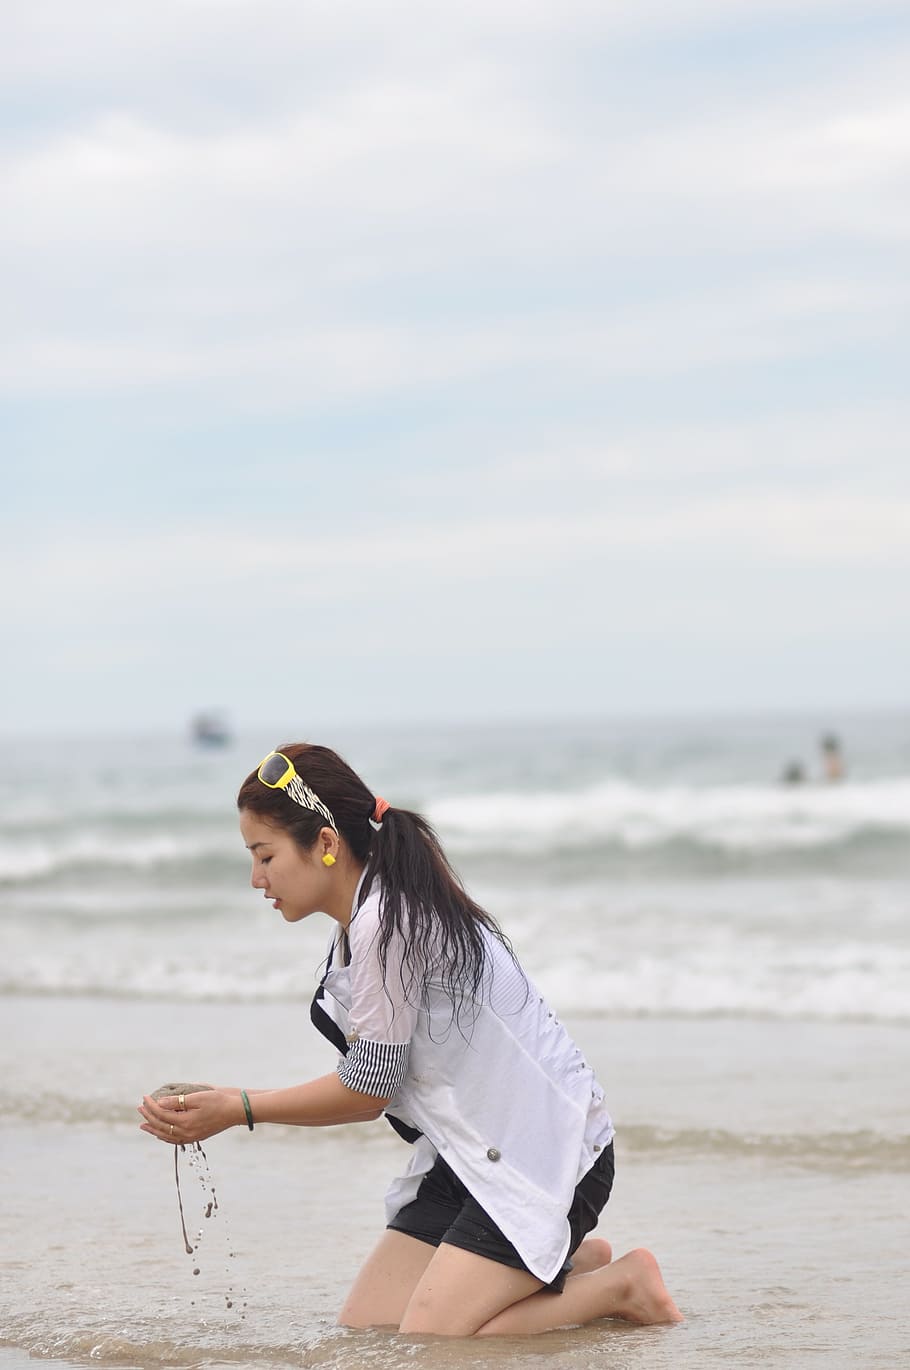 woman kneeing, shore, holding, water, sand, daytime, Girl, Beach, Sad, Summer, Vacation